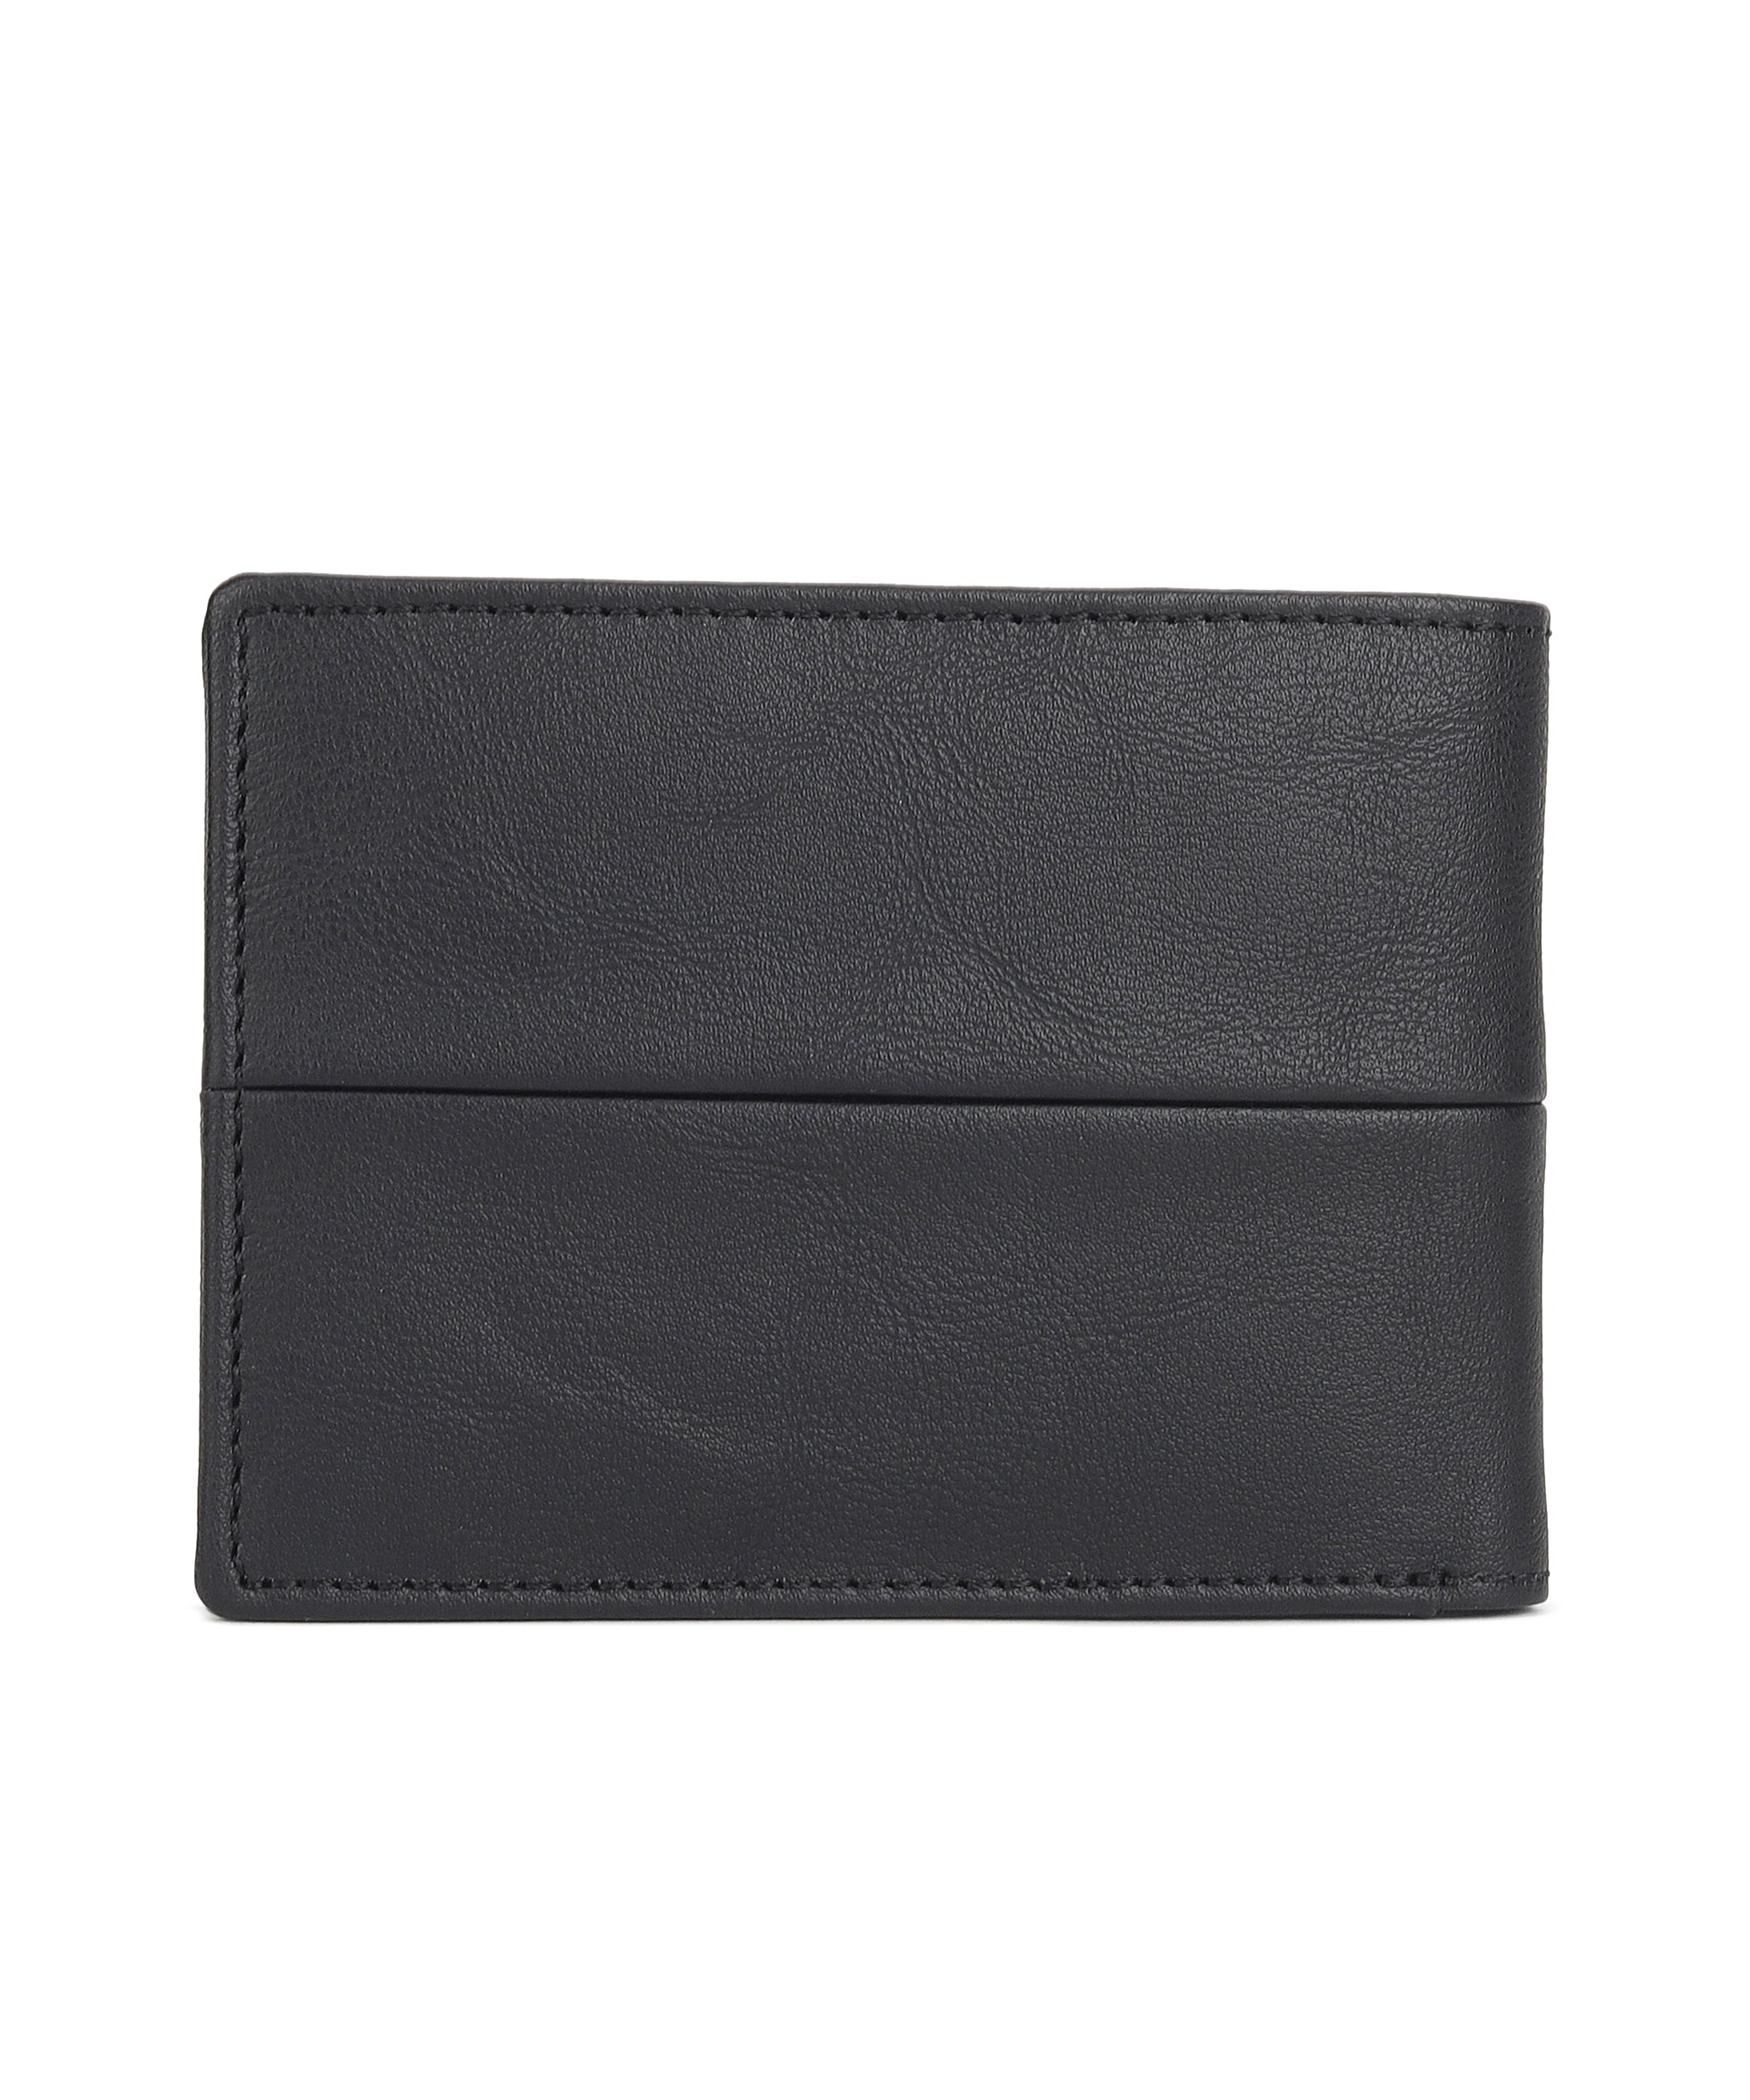 Urbano Fashion Men's Black Casual, Formal Leather Wallet-6 Card Slots